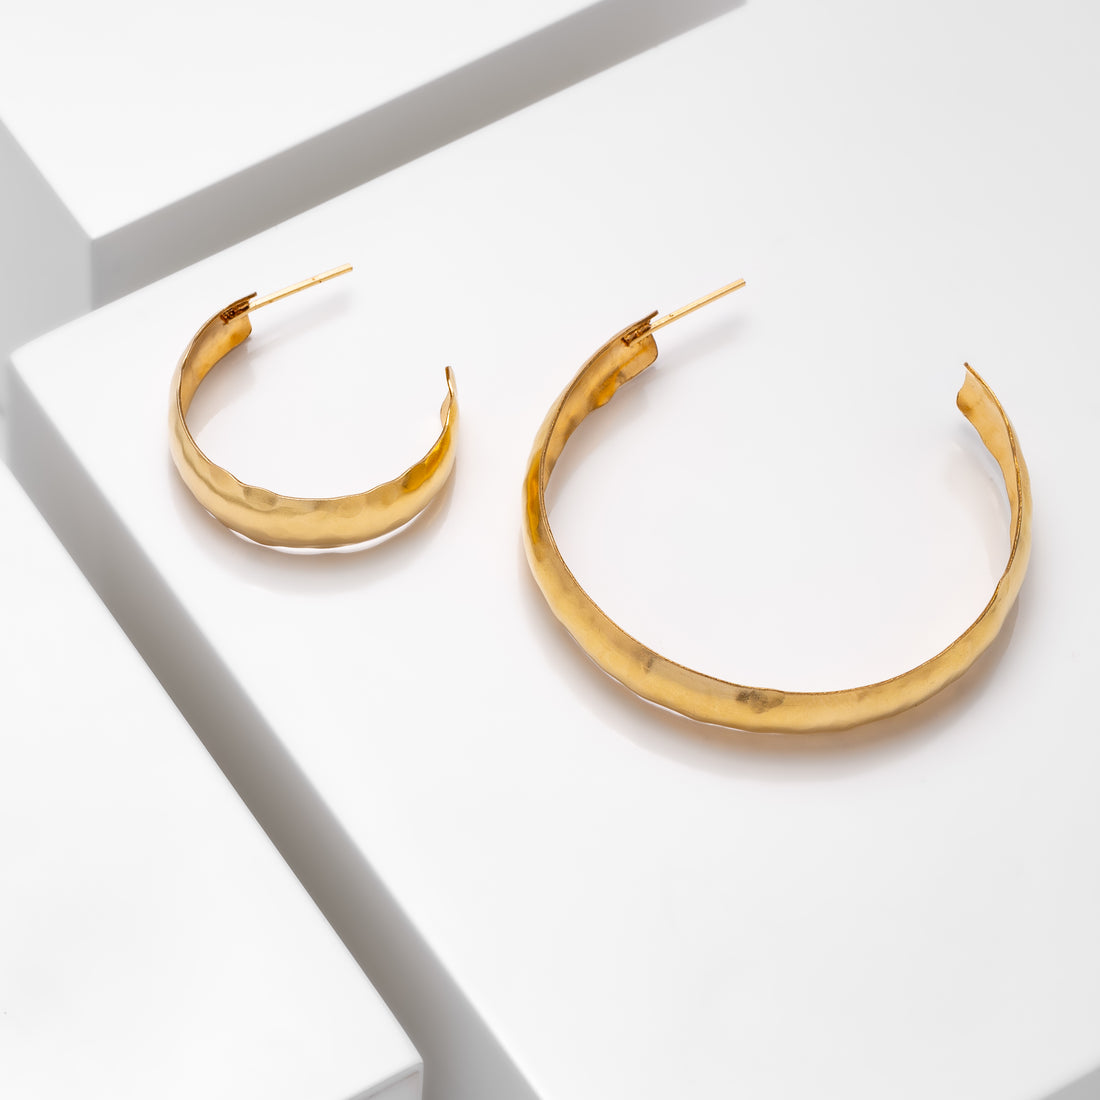 hammered hoop earring in 14k gold filled or sterling silver